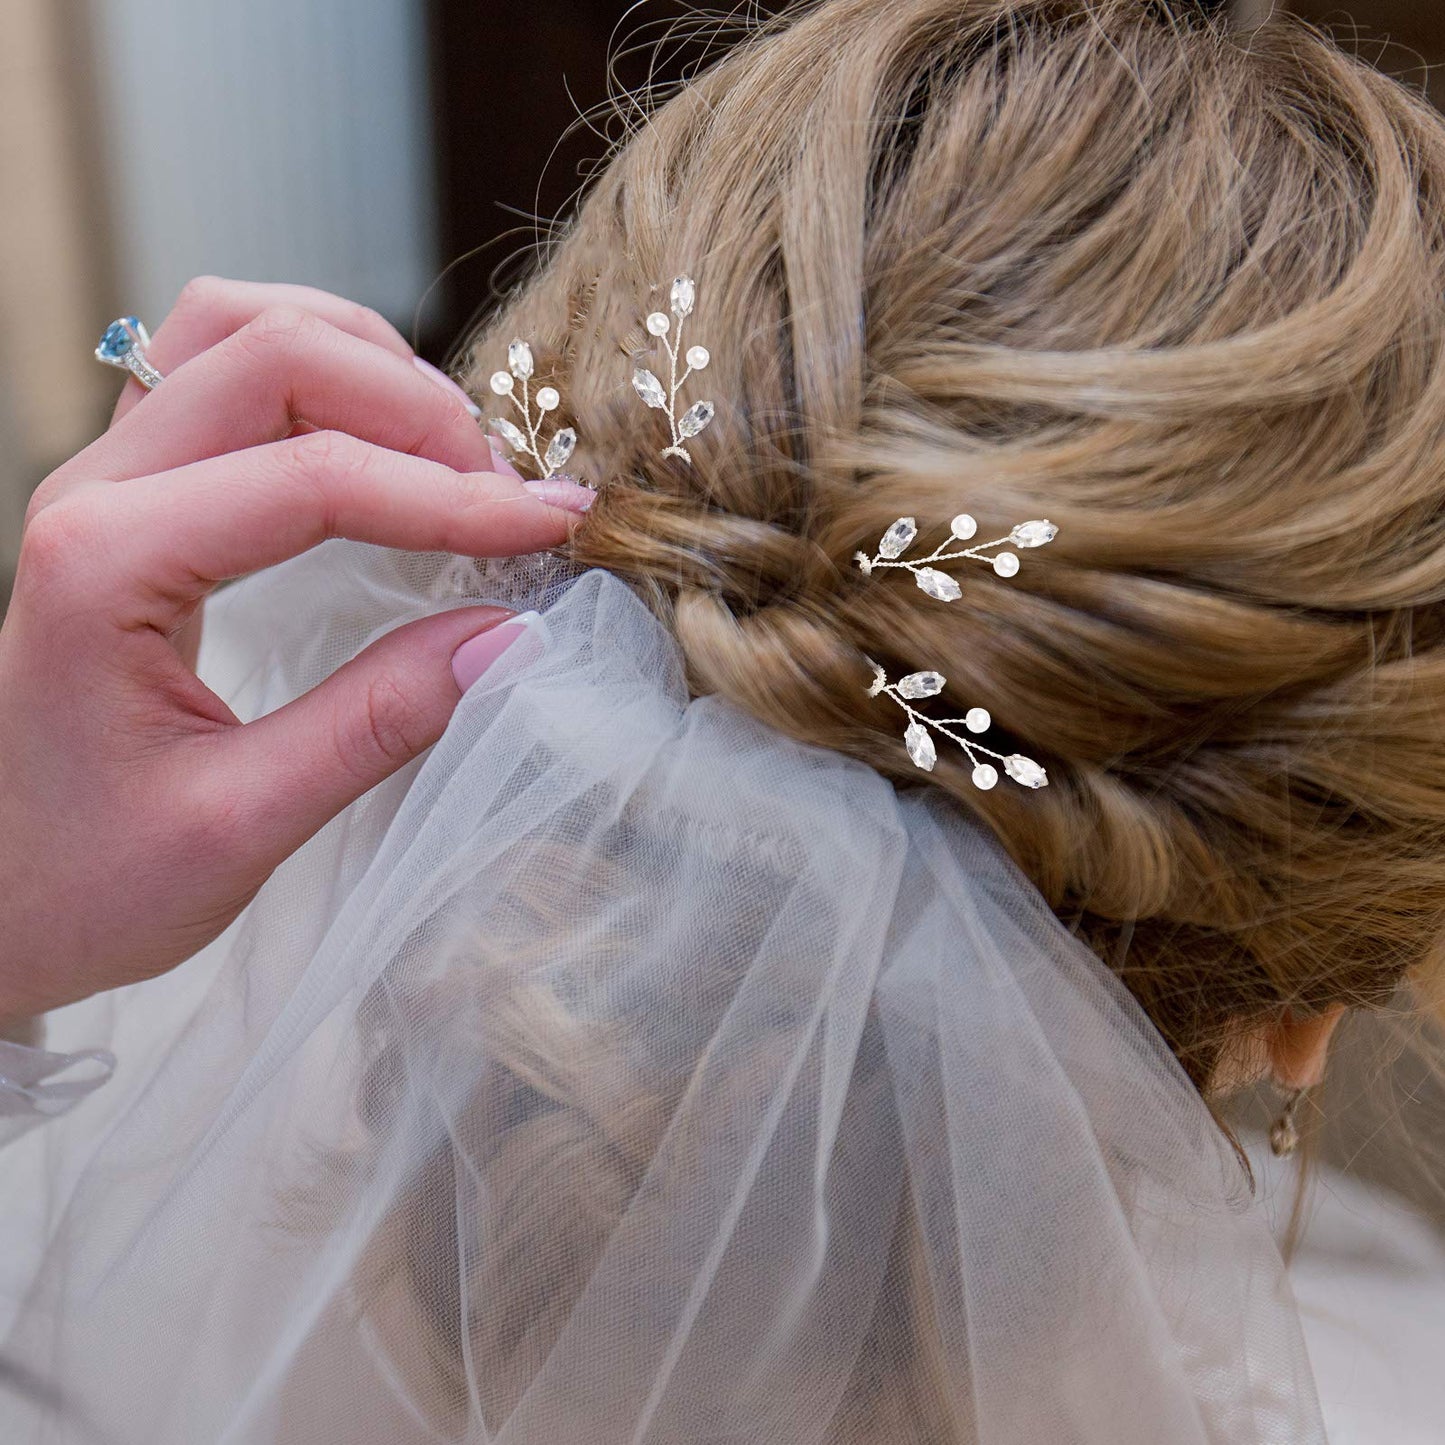 6 Pieces Pearl Crystal Bridal Hair Pins Rhinestone Flower Wedding Hair Piece Vintage Hair Accessory Party Hair Pins for Bride, Bridesmaids, Flower Girls (Silver)